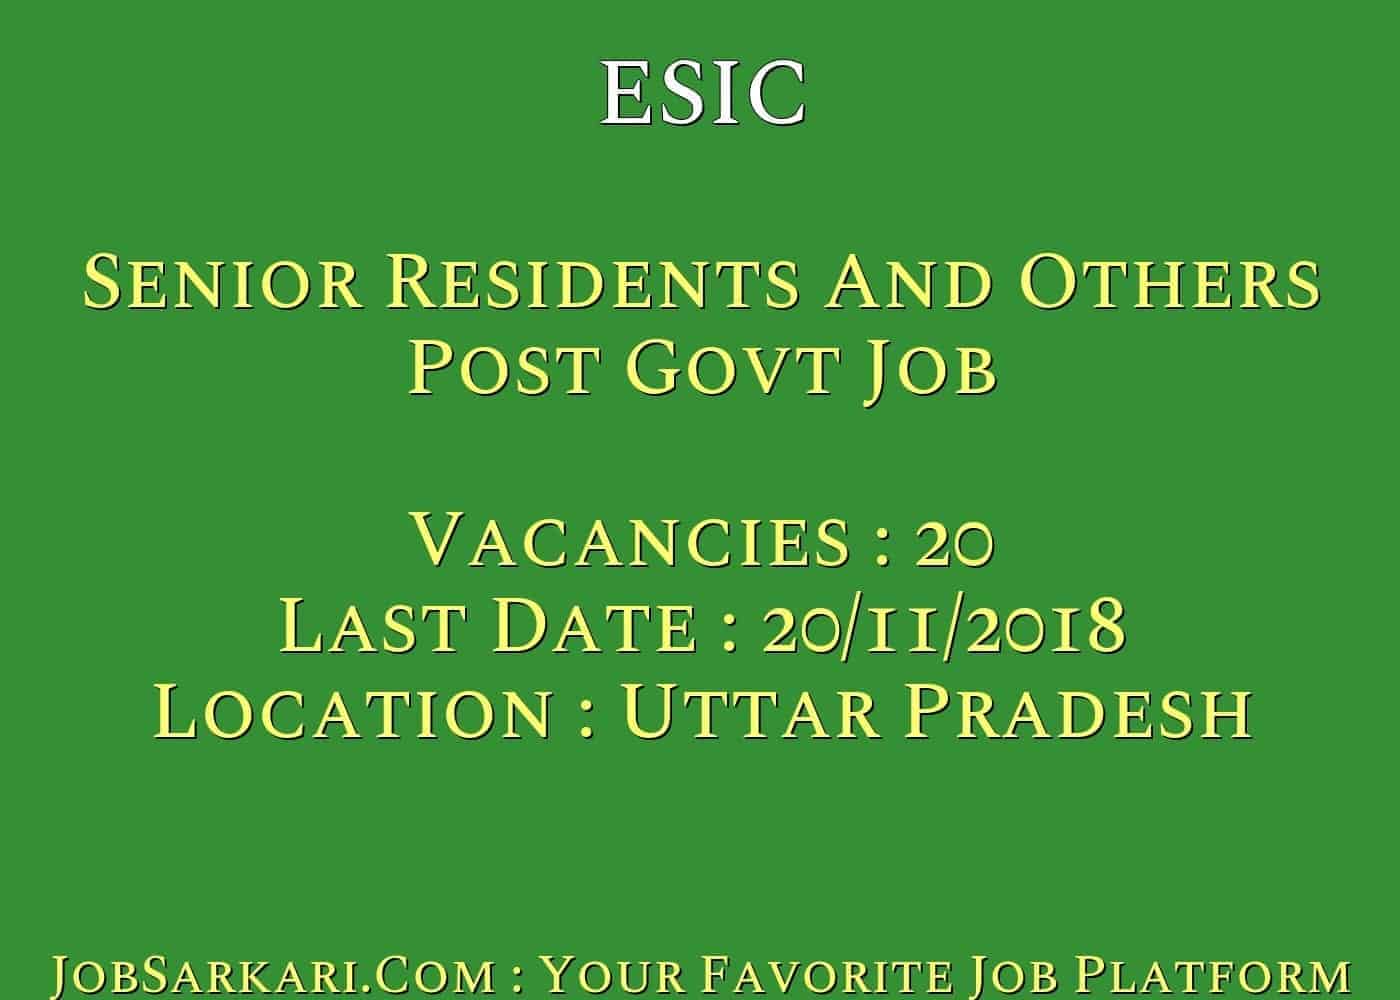 ESIC Recruitment 2018 For Senior Residents And Others Post Govt Job